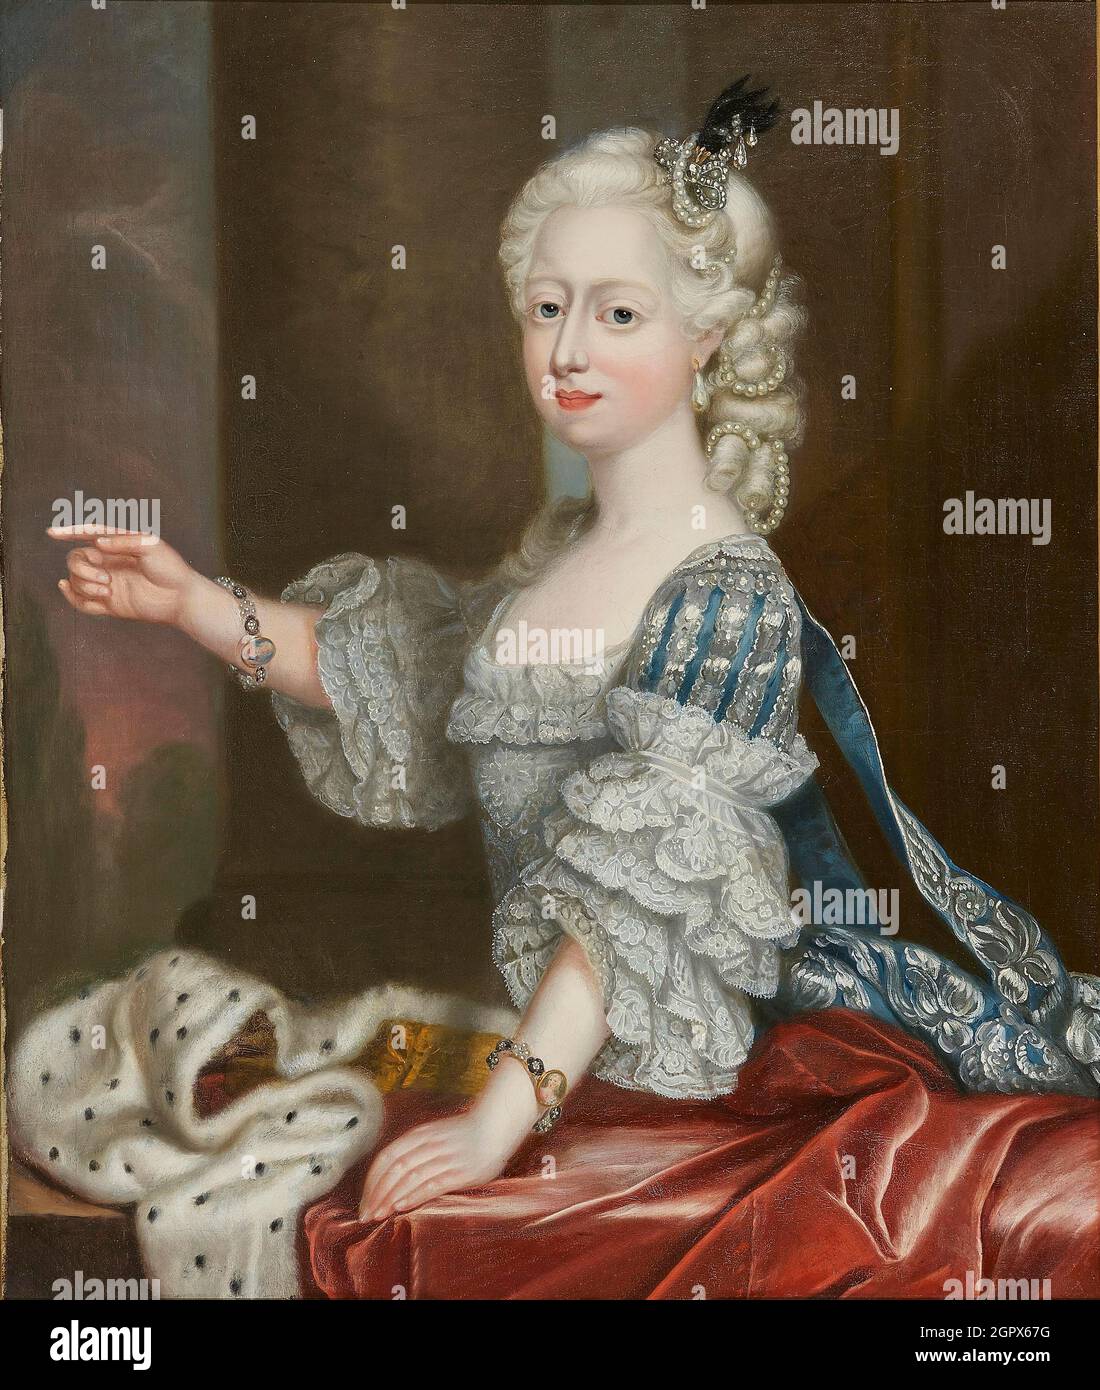 Princesa Augusta Frederica de Gran Bretaña (1737-1813), duquesa de Brunswick-Wolfenbuttel. Colección privada. Foto de stock